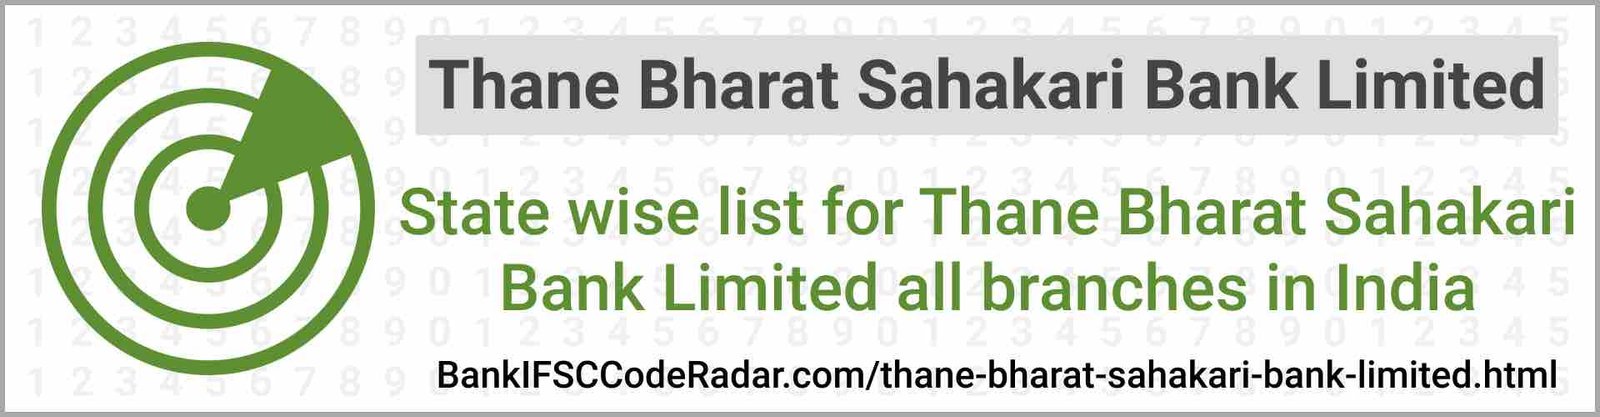 Thane Bharat Sahakari Bank Limited All Branches India